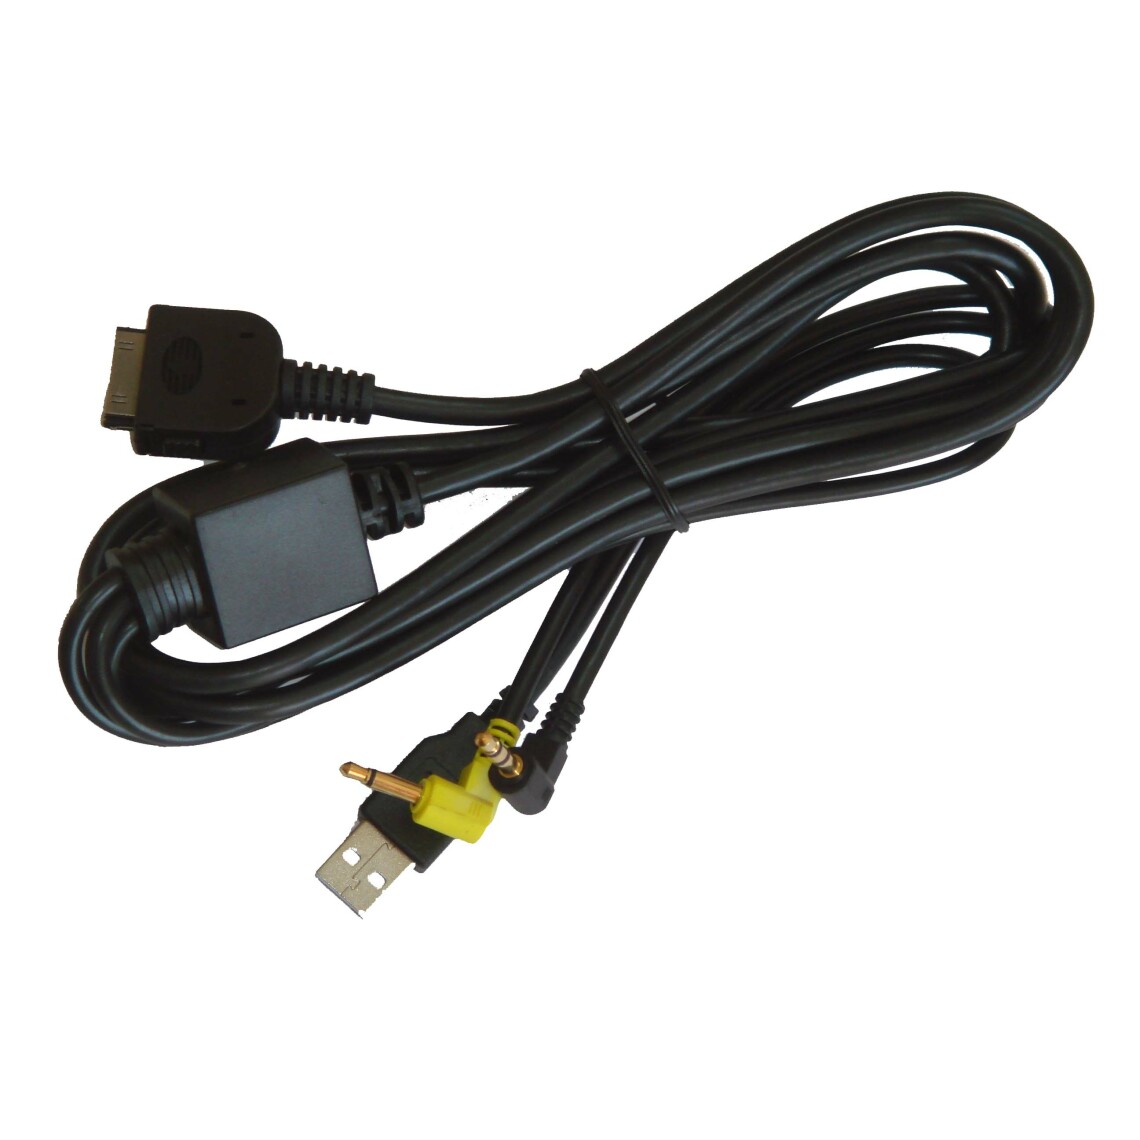 Vhbw - vhbw Câble adaptateur de ligne AUX Radio compatible avec Kenwood DDX8019, DDX8022BT, DDX8022BTY, DDX8024BT, DDX8029, DDX8029Y voiture - USB, AV - Alimentation modulaire